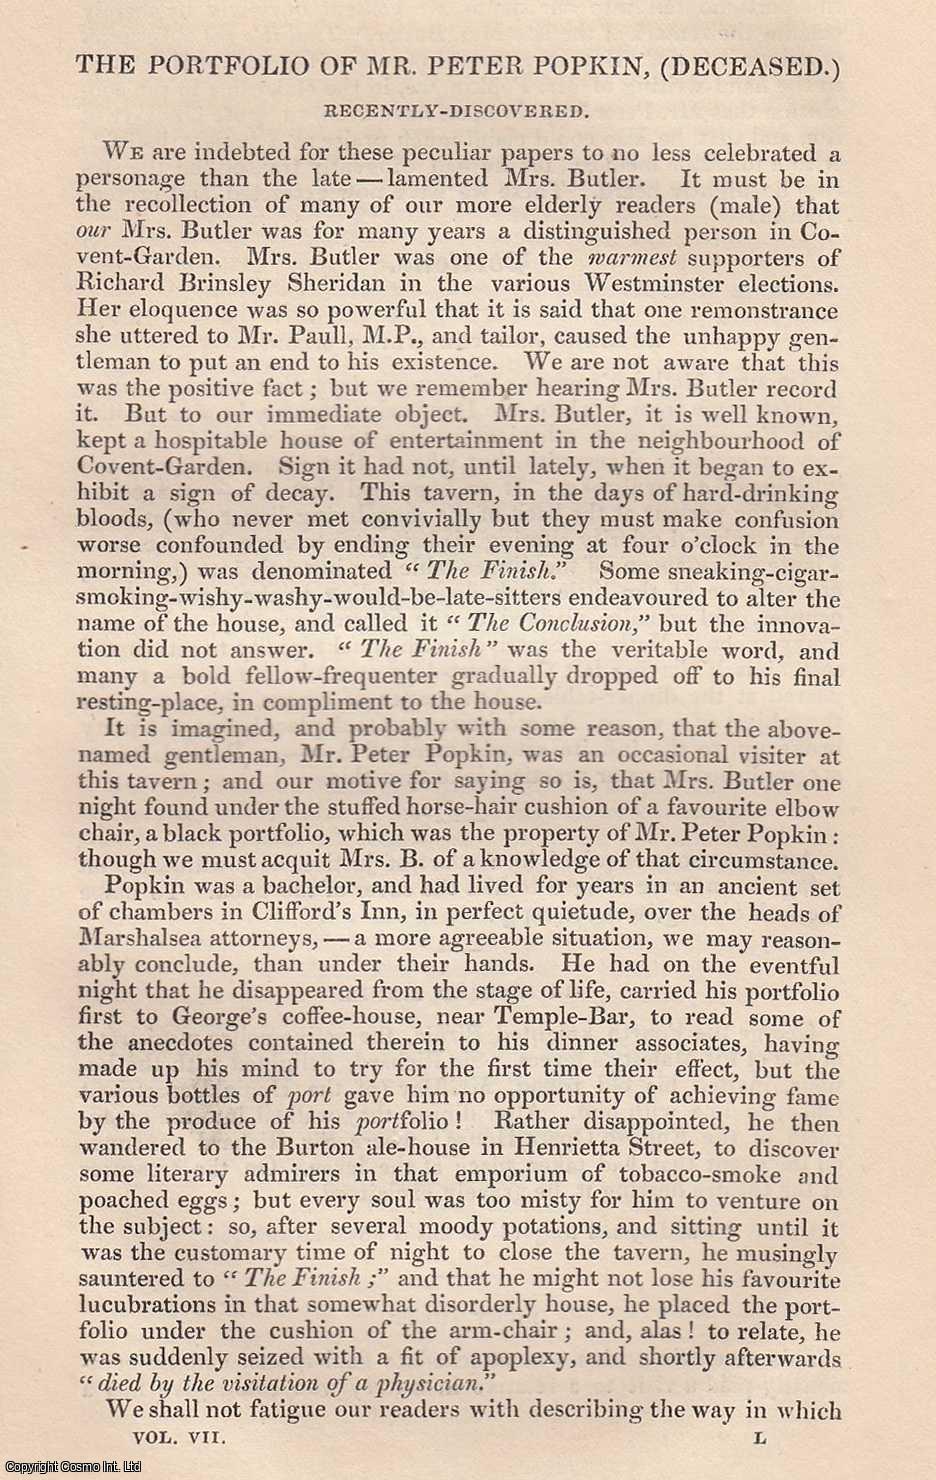 R.B. Peake - The Portfolio of Mr. Peter Popkin (deceased). An original essay from Bentley's Miscellany, 1840.